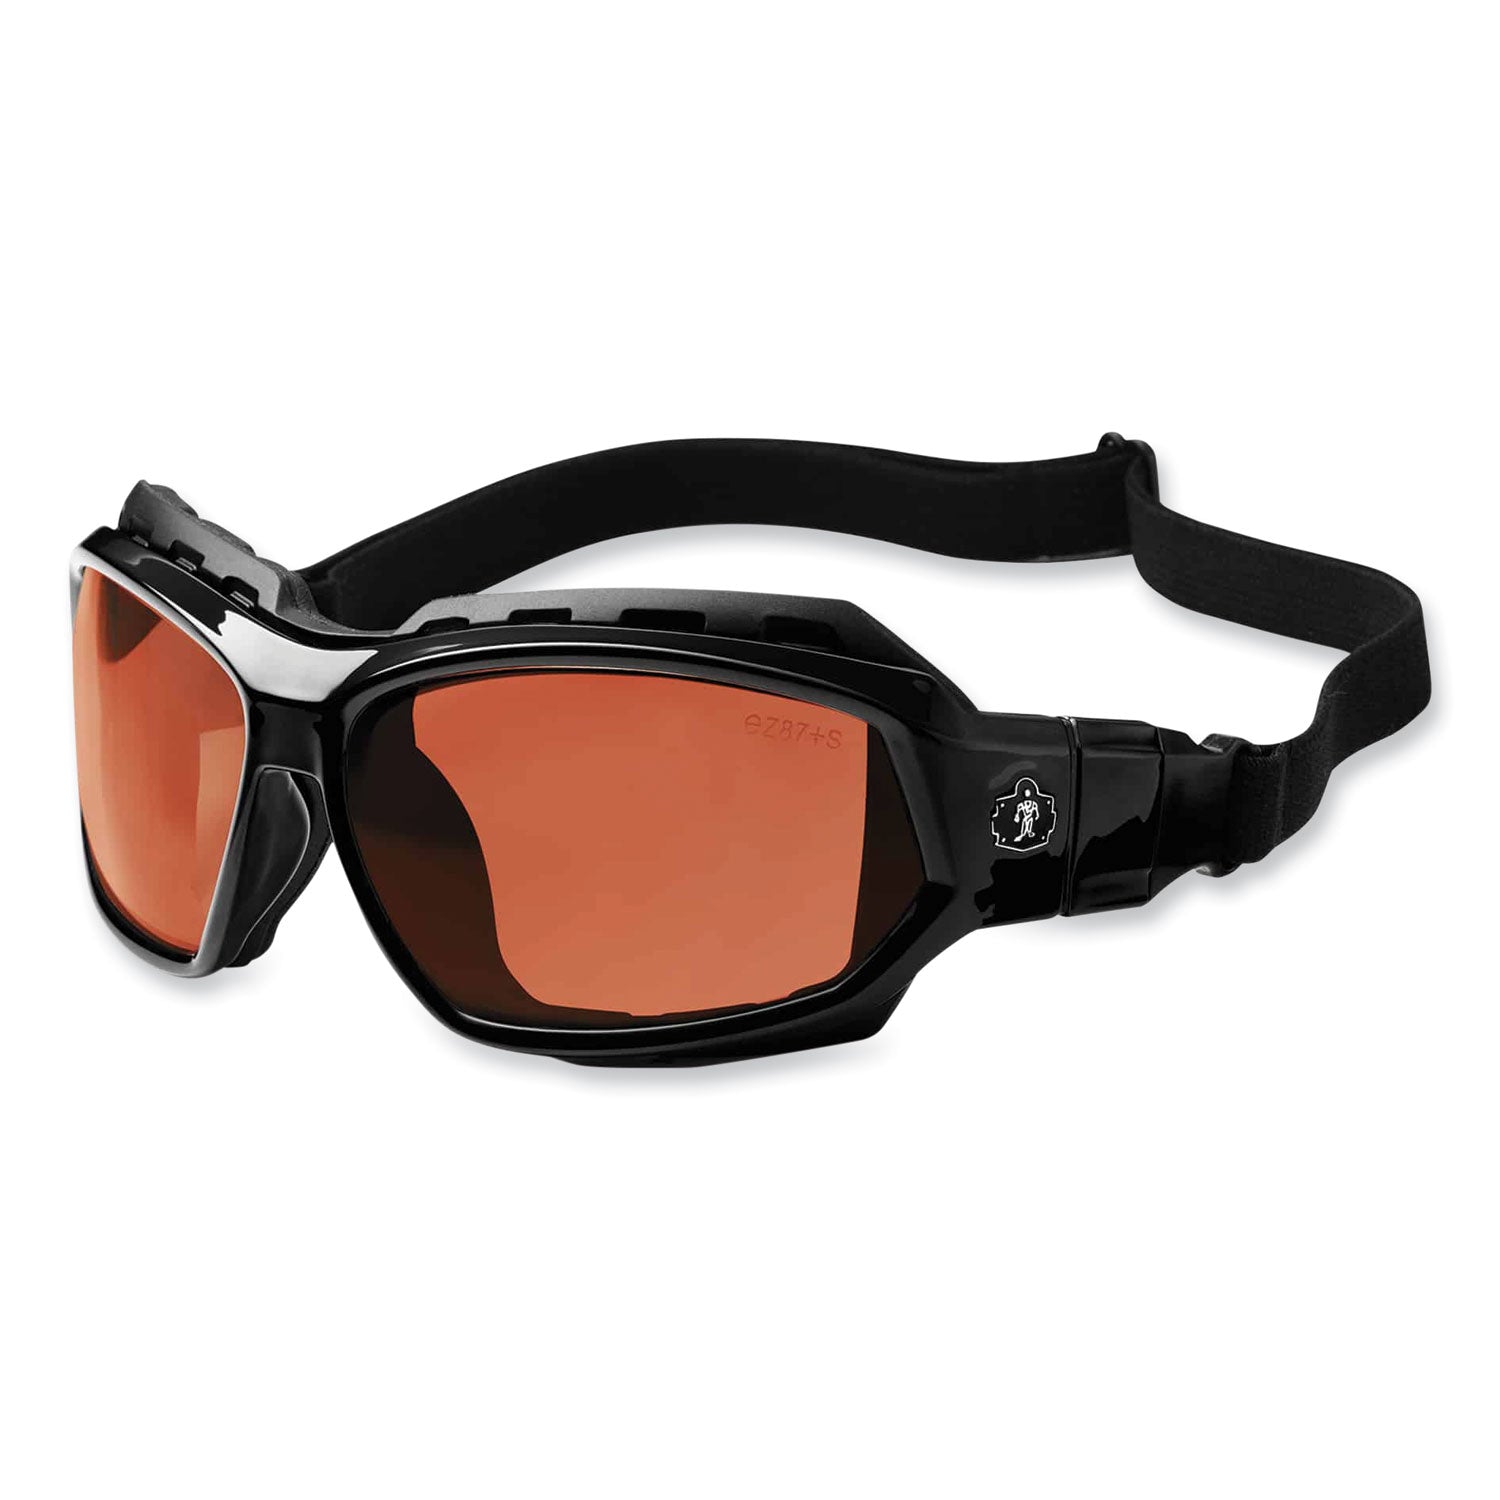 skullerz-loki-safety-glasses-goggles-black-nylon-impact-frame-polarized-copper-polycarb-lens-ships-in-1-3-business-days_ego56021 - 2